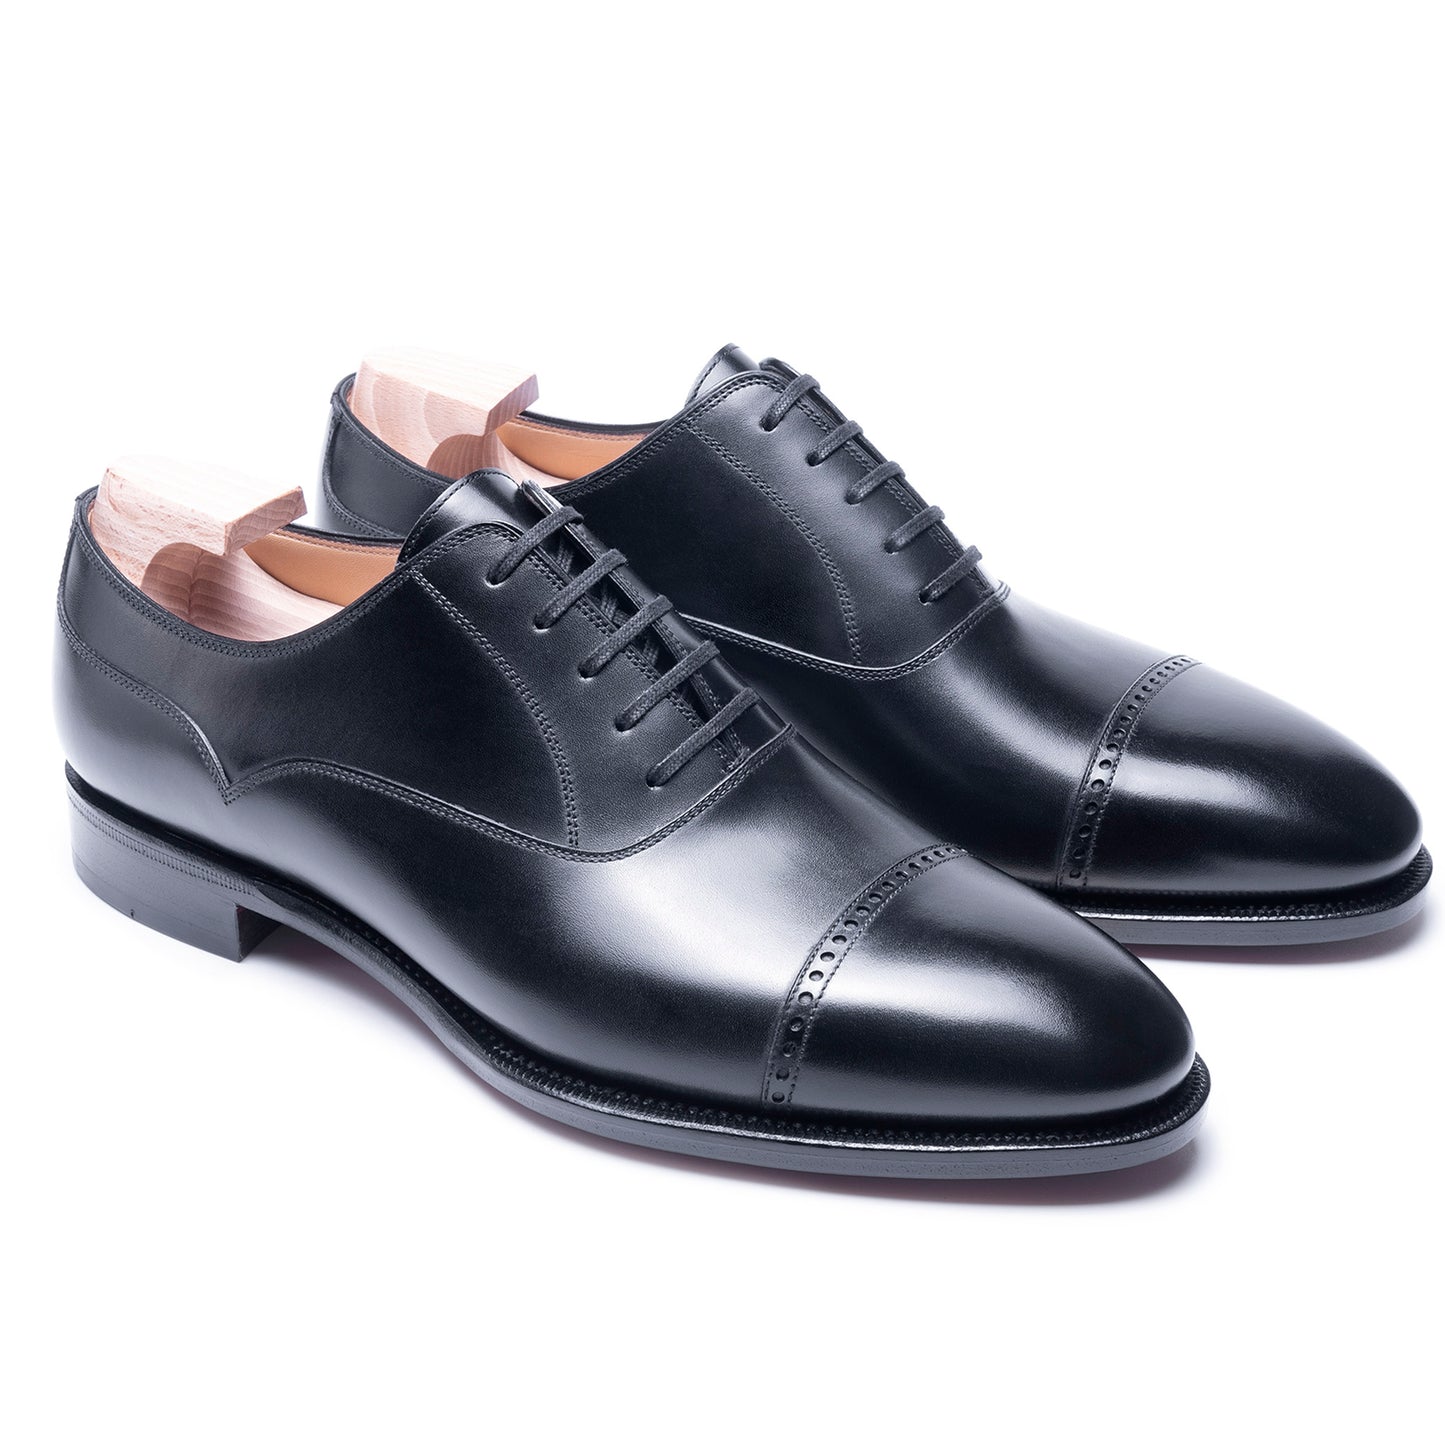 TLB Mallorca leather shoes 241 / GOYA / BOXCALF BLACK